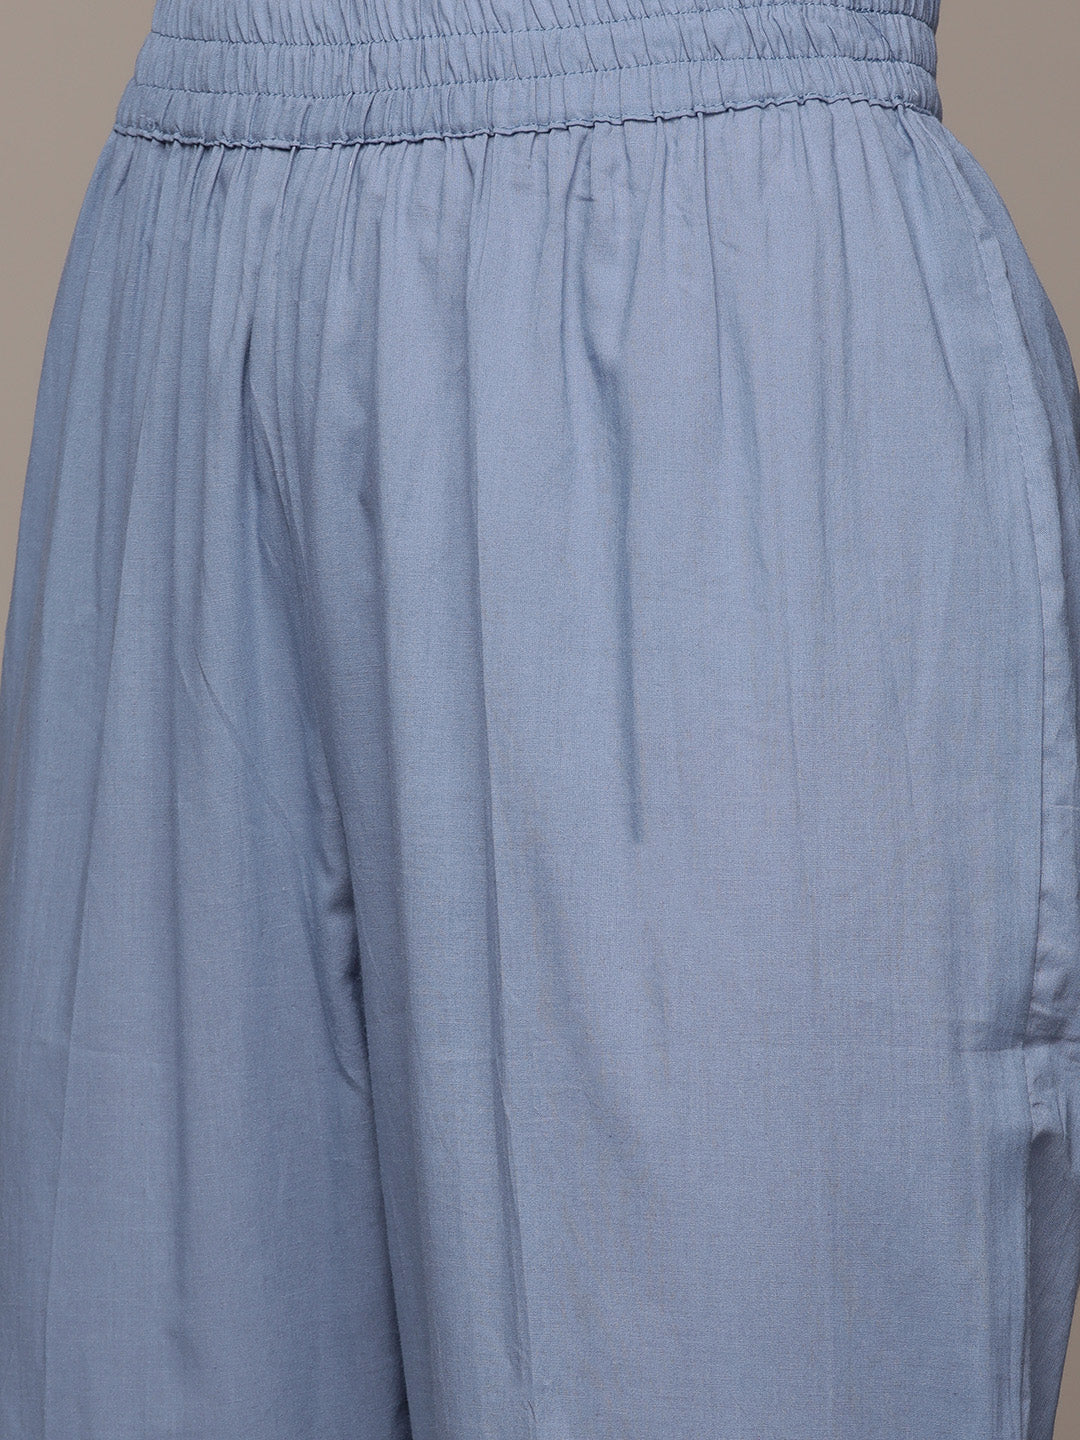 Ishin Women's Cotton Blue & White Embroidered A-Line Kurta Trouser Dupatta Set